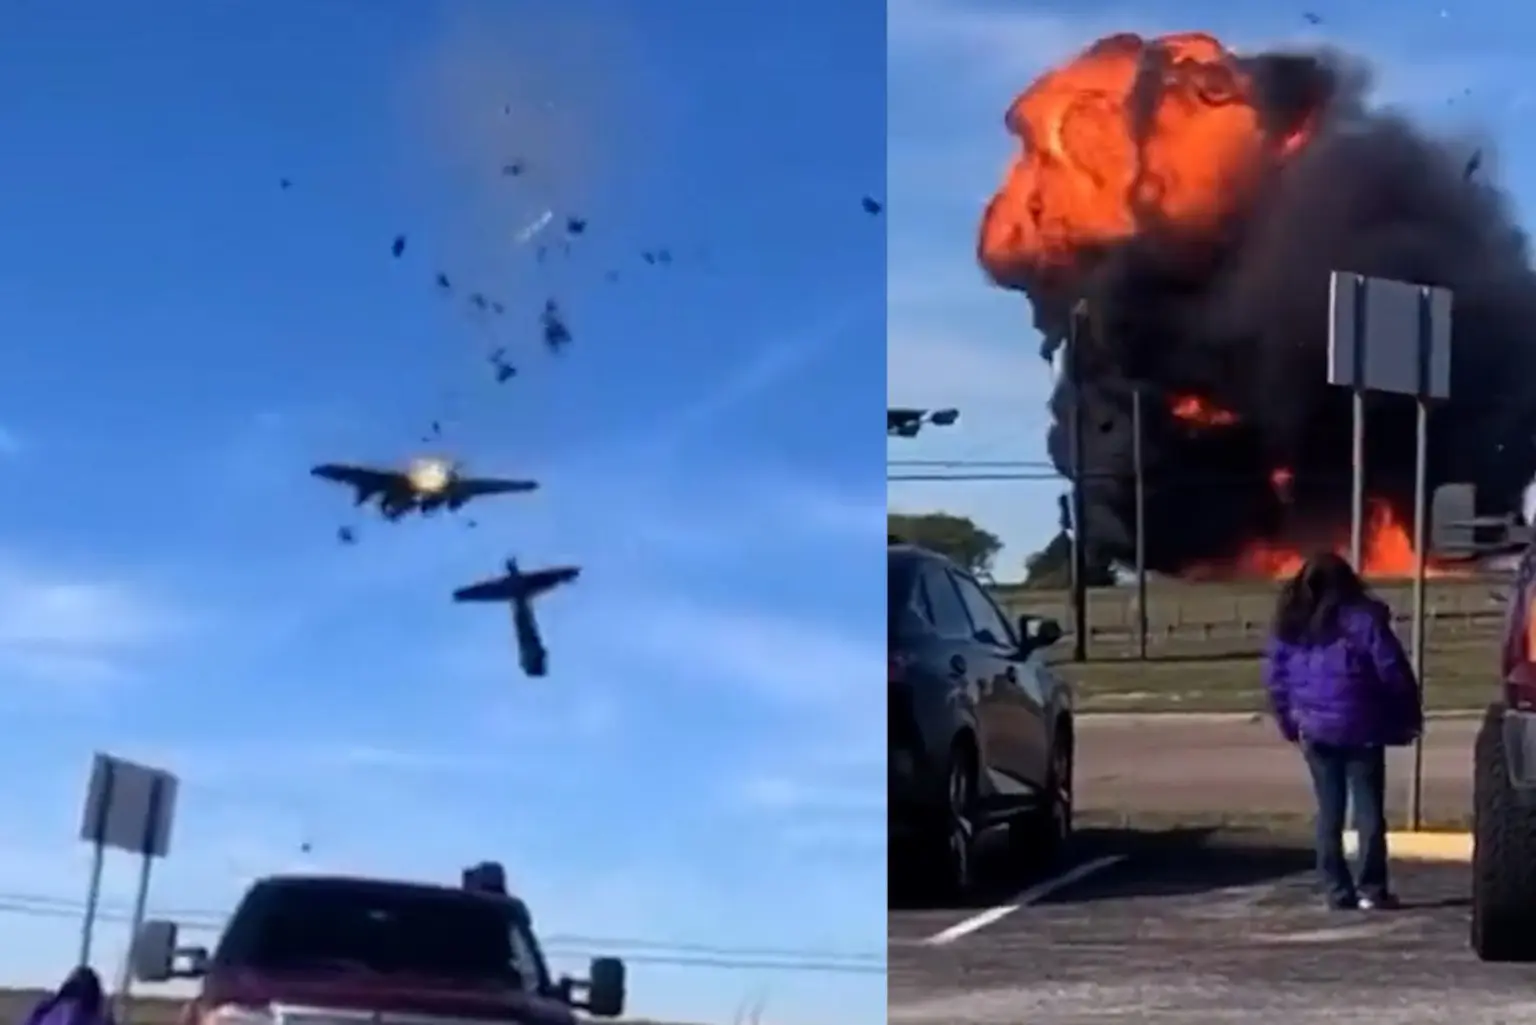 Dallas Airshow crash